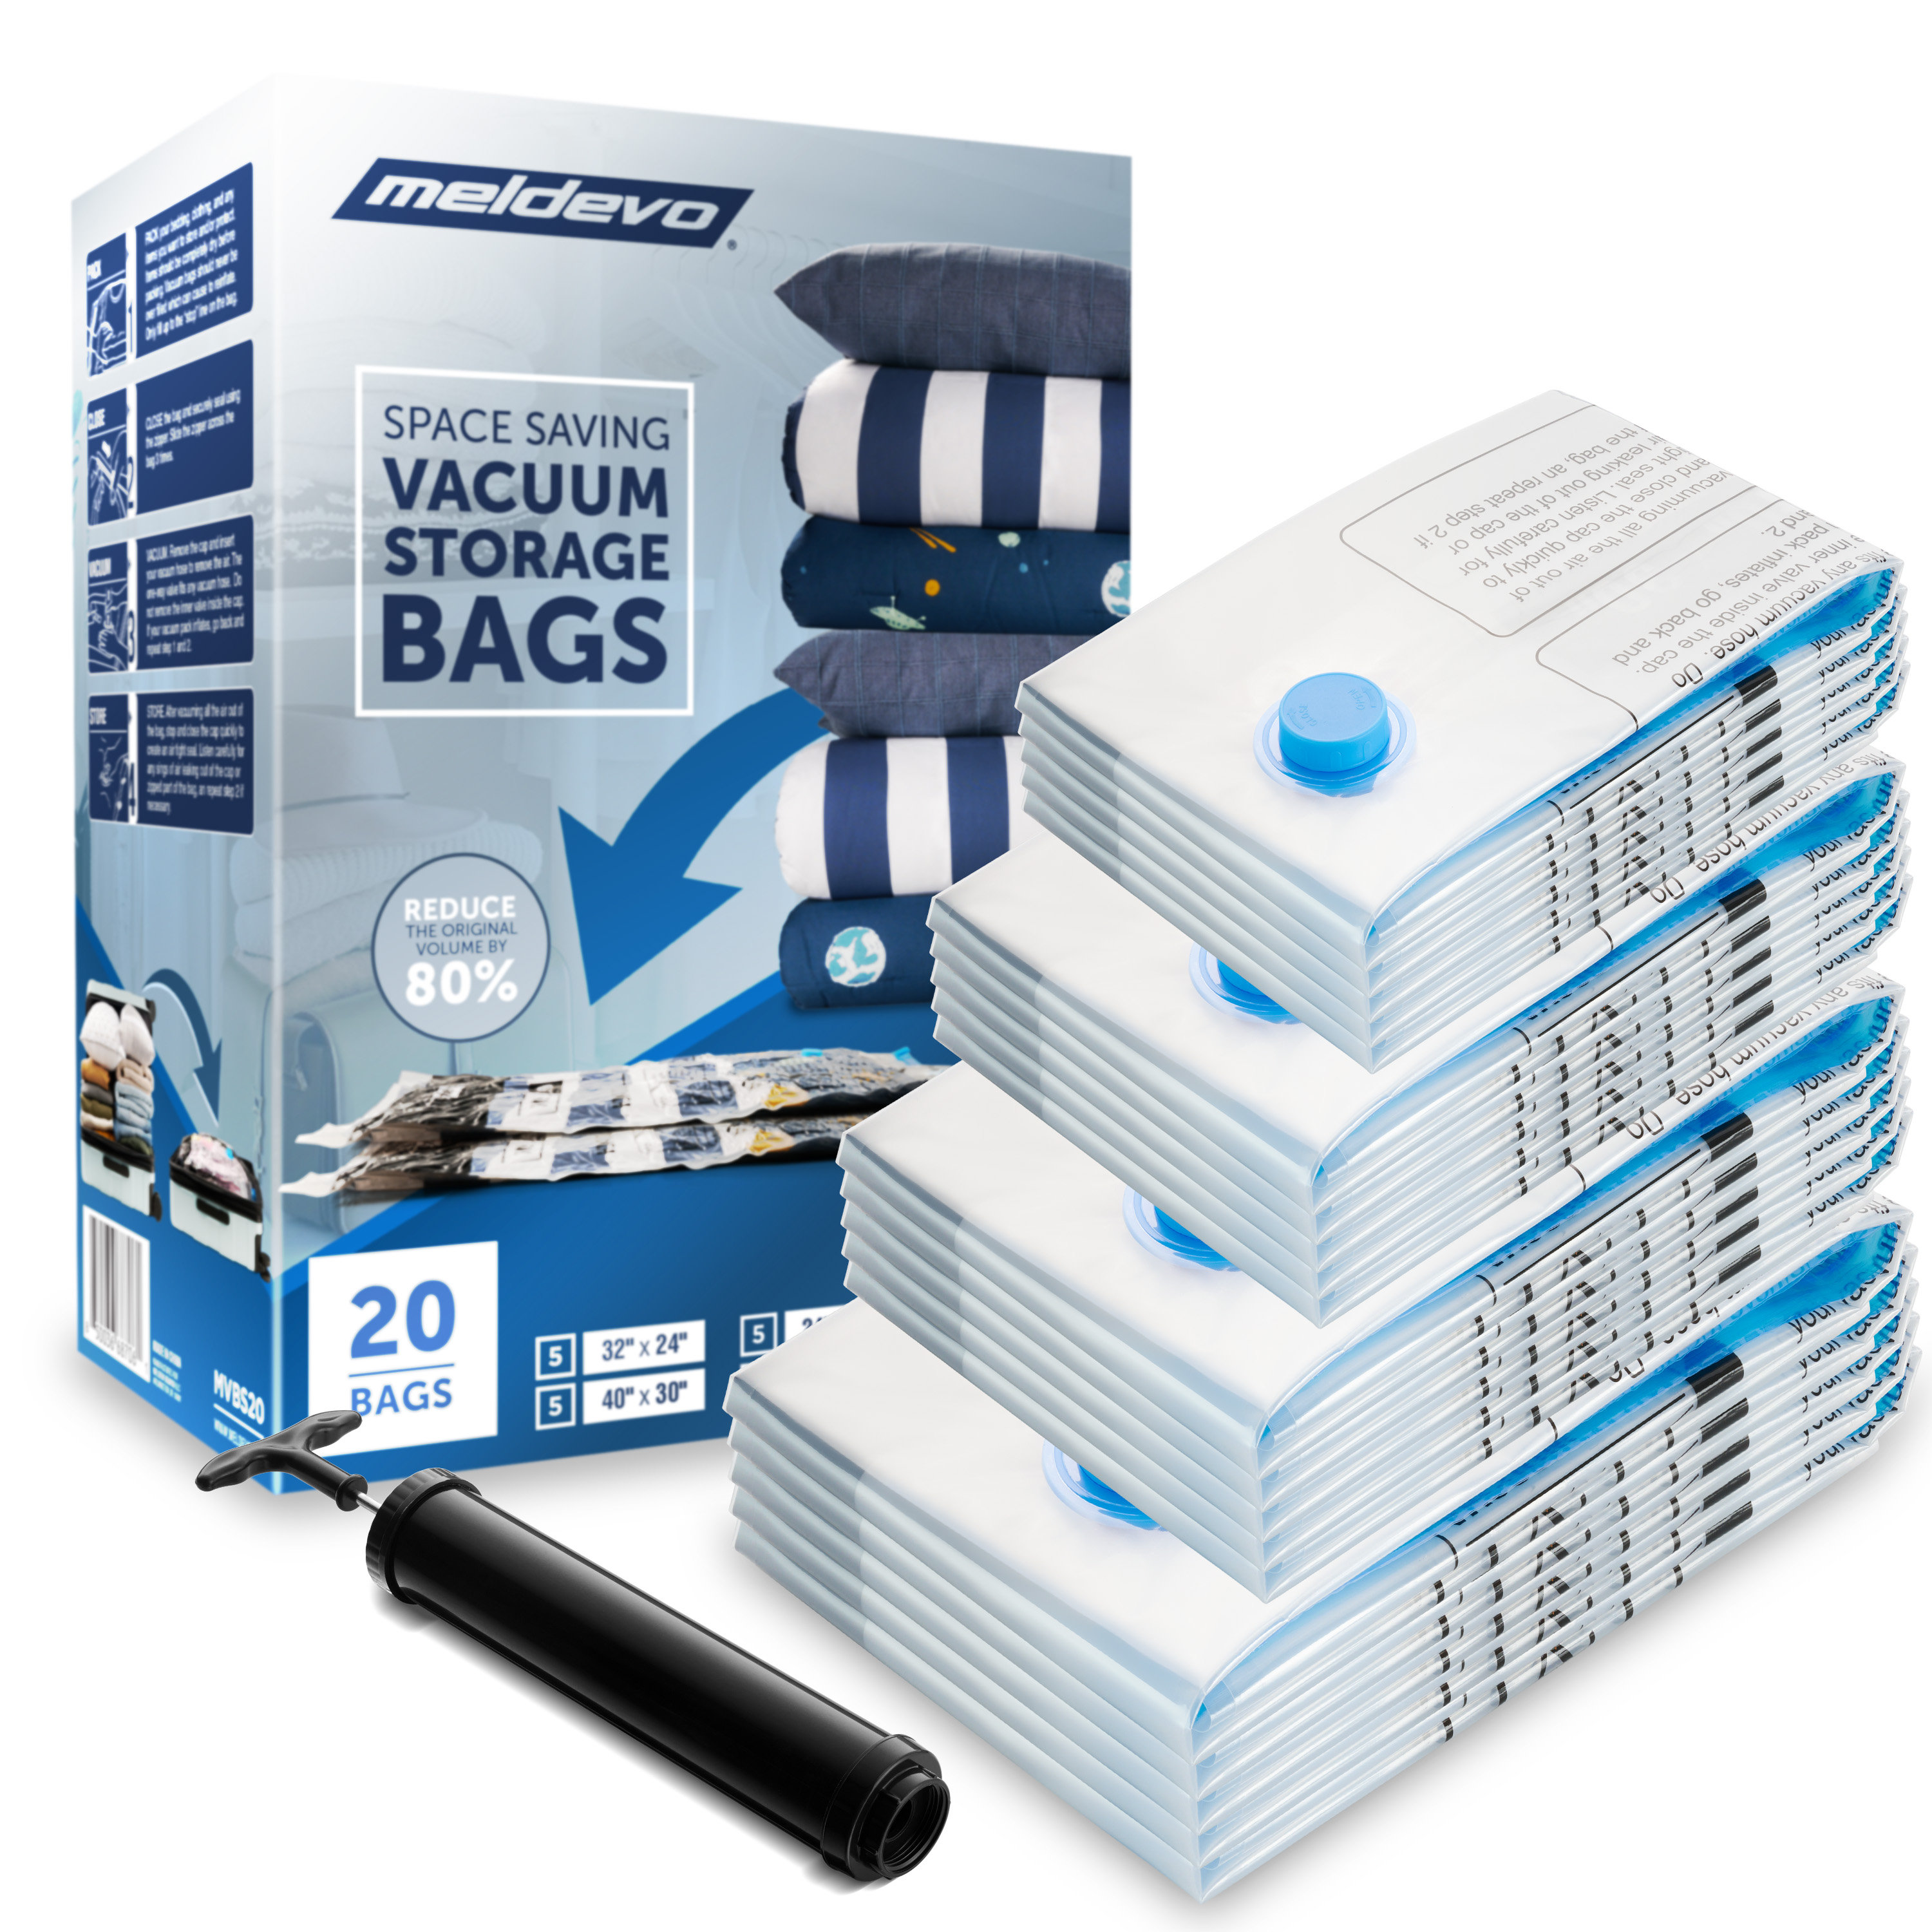 SPACEMORE Premium Reusable Vacuum Storage Bags Jumbo 40 x 30 (4 Pack), Save 80% Storage Space with Vacuum Sealed Compression Bags & Leak Valve, Space